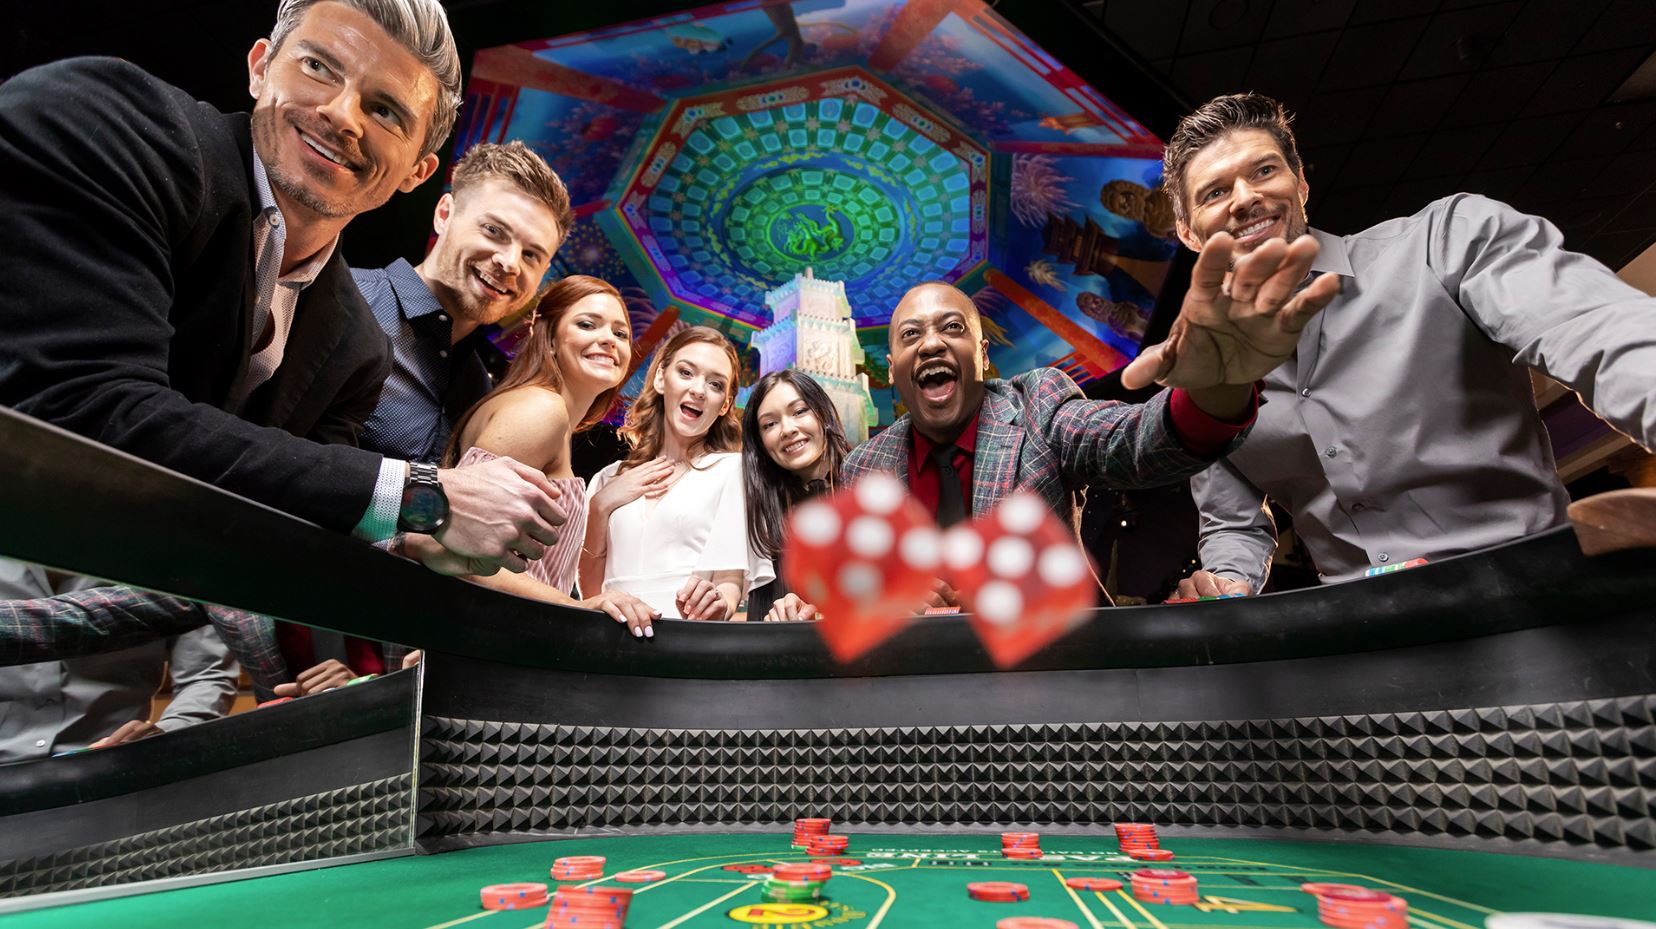 Best casino experience